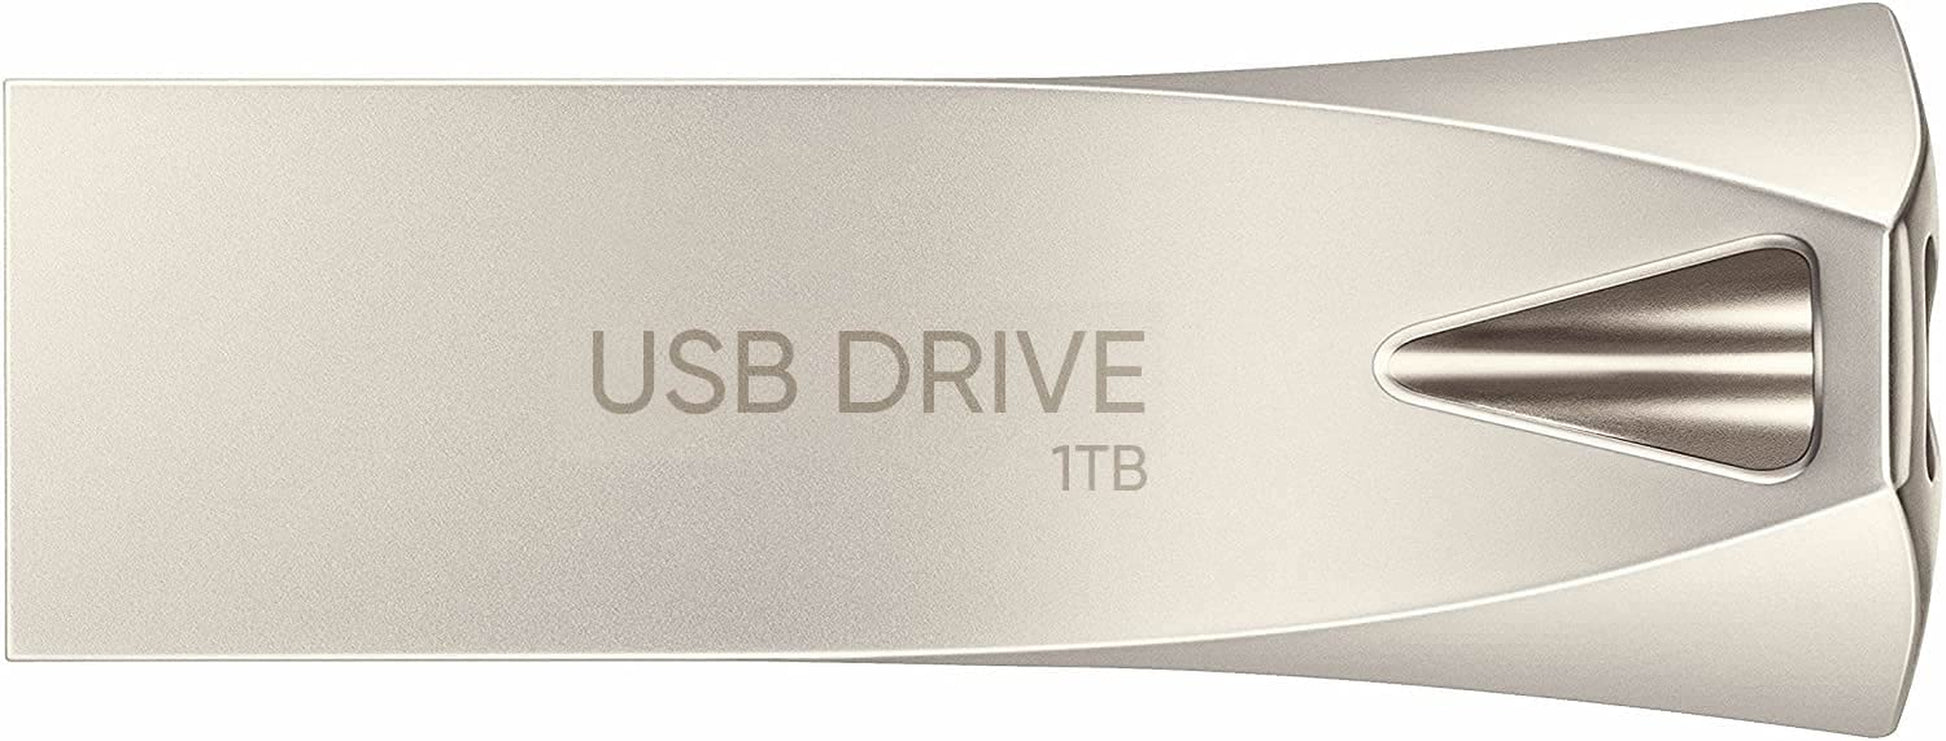 USB Flash Drive 1TB, Flash Stick 1000GB, Portable U Disk Pen Drive, Large Storage ​​Thumb Drive, USB Memory Stick 1T Data Storage for Tablet PC Laptop Computers (Gold)